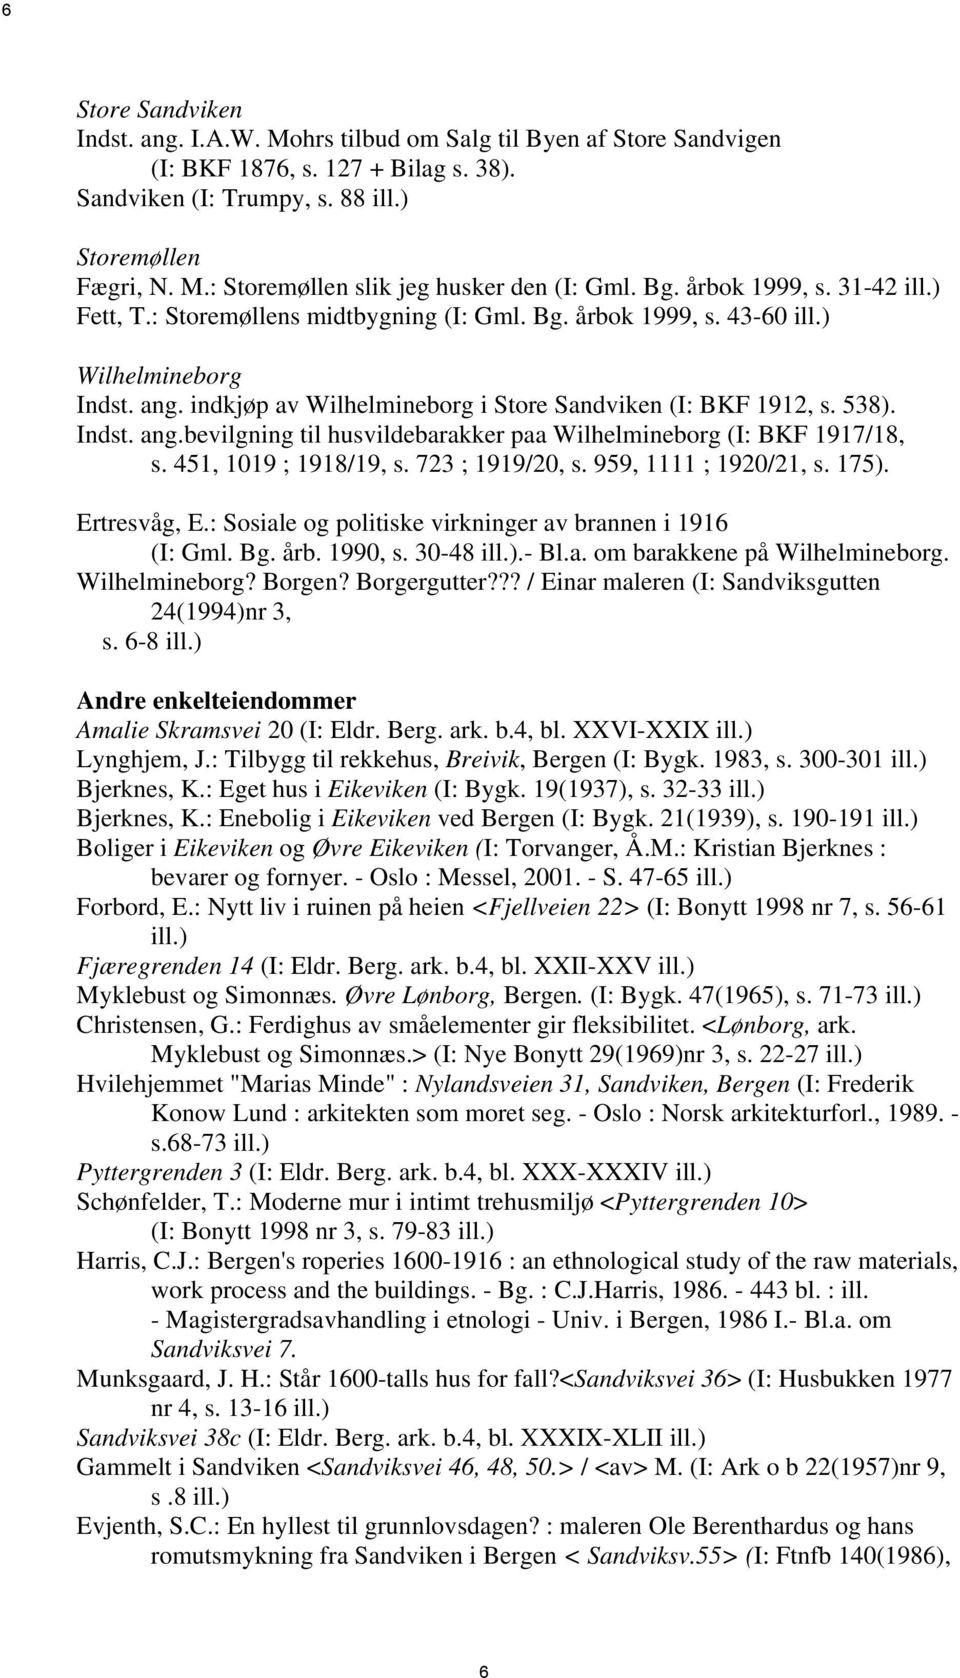 Indst. ang.bevilgning til husvildebarakker paa Wilhelmineborg (I: BKF 1917/18, s. 451, 1019 ; 1918/19, s. 723 ; 1919/20, s. 959, 1111 ; 1920/21, s. 175). Ertresvåg, E.